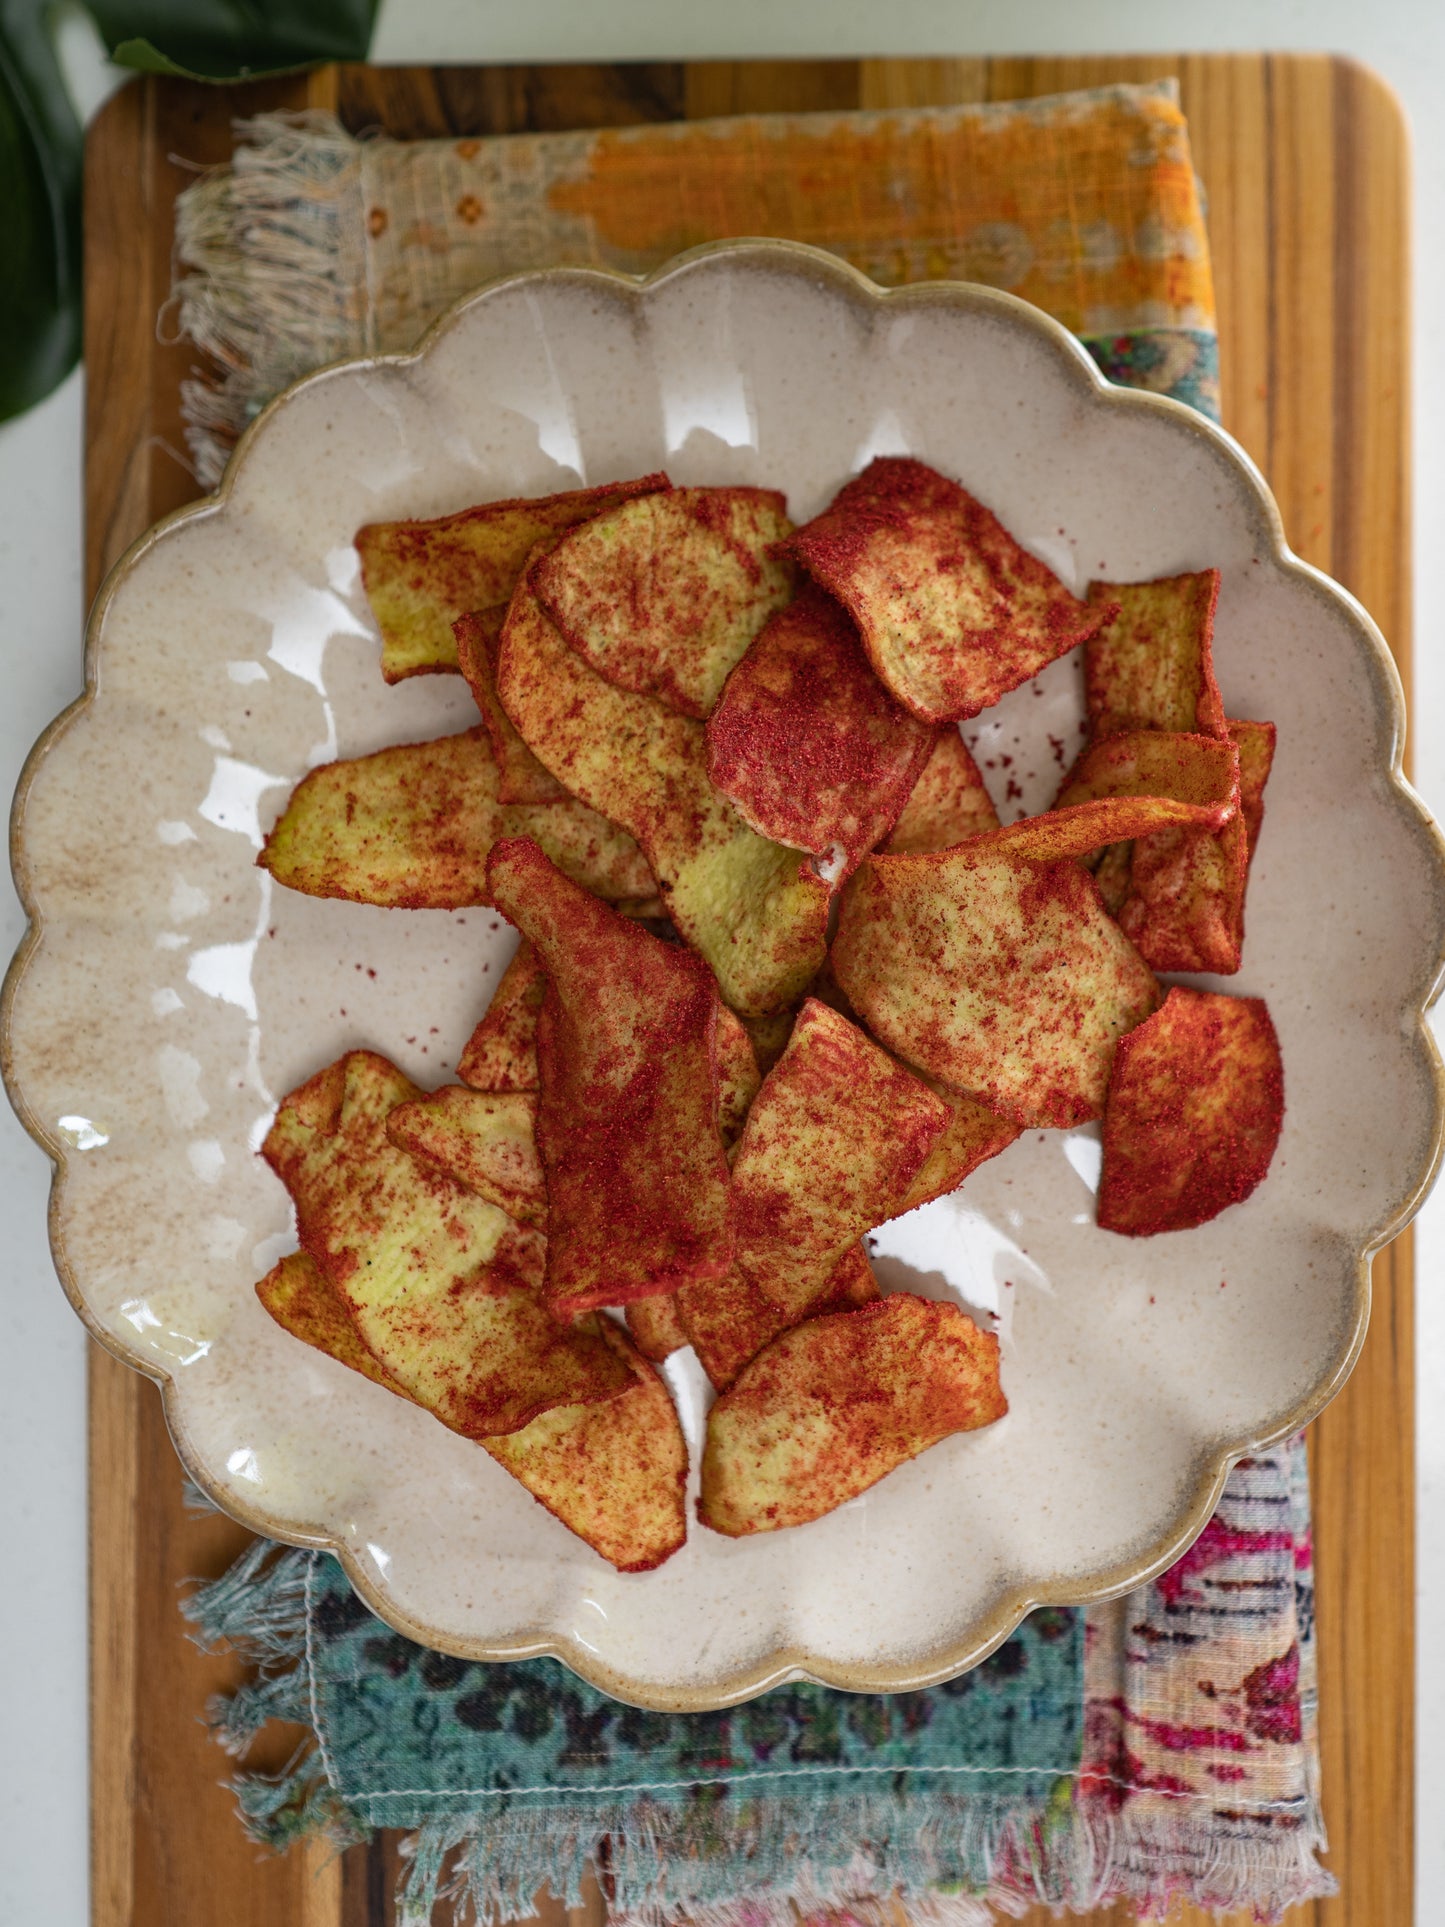 Pepino Horneado / Baked Cucumber Chips